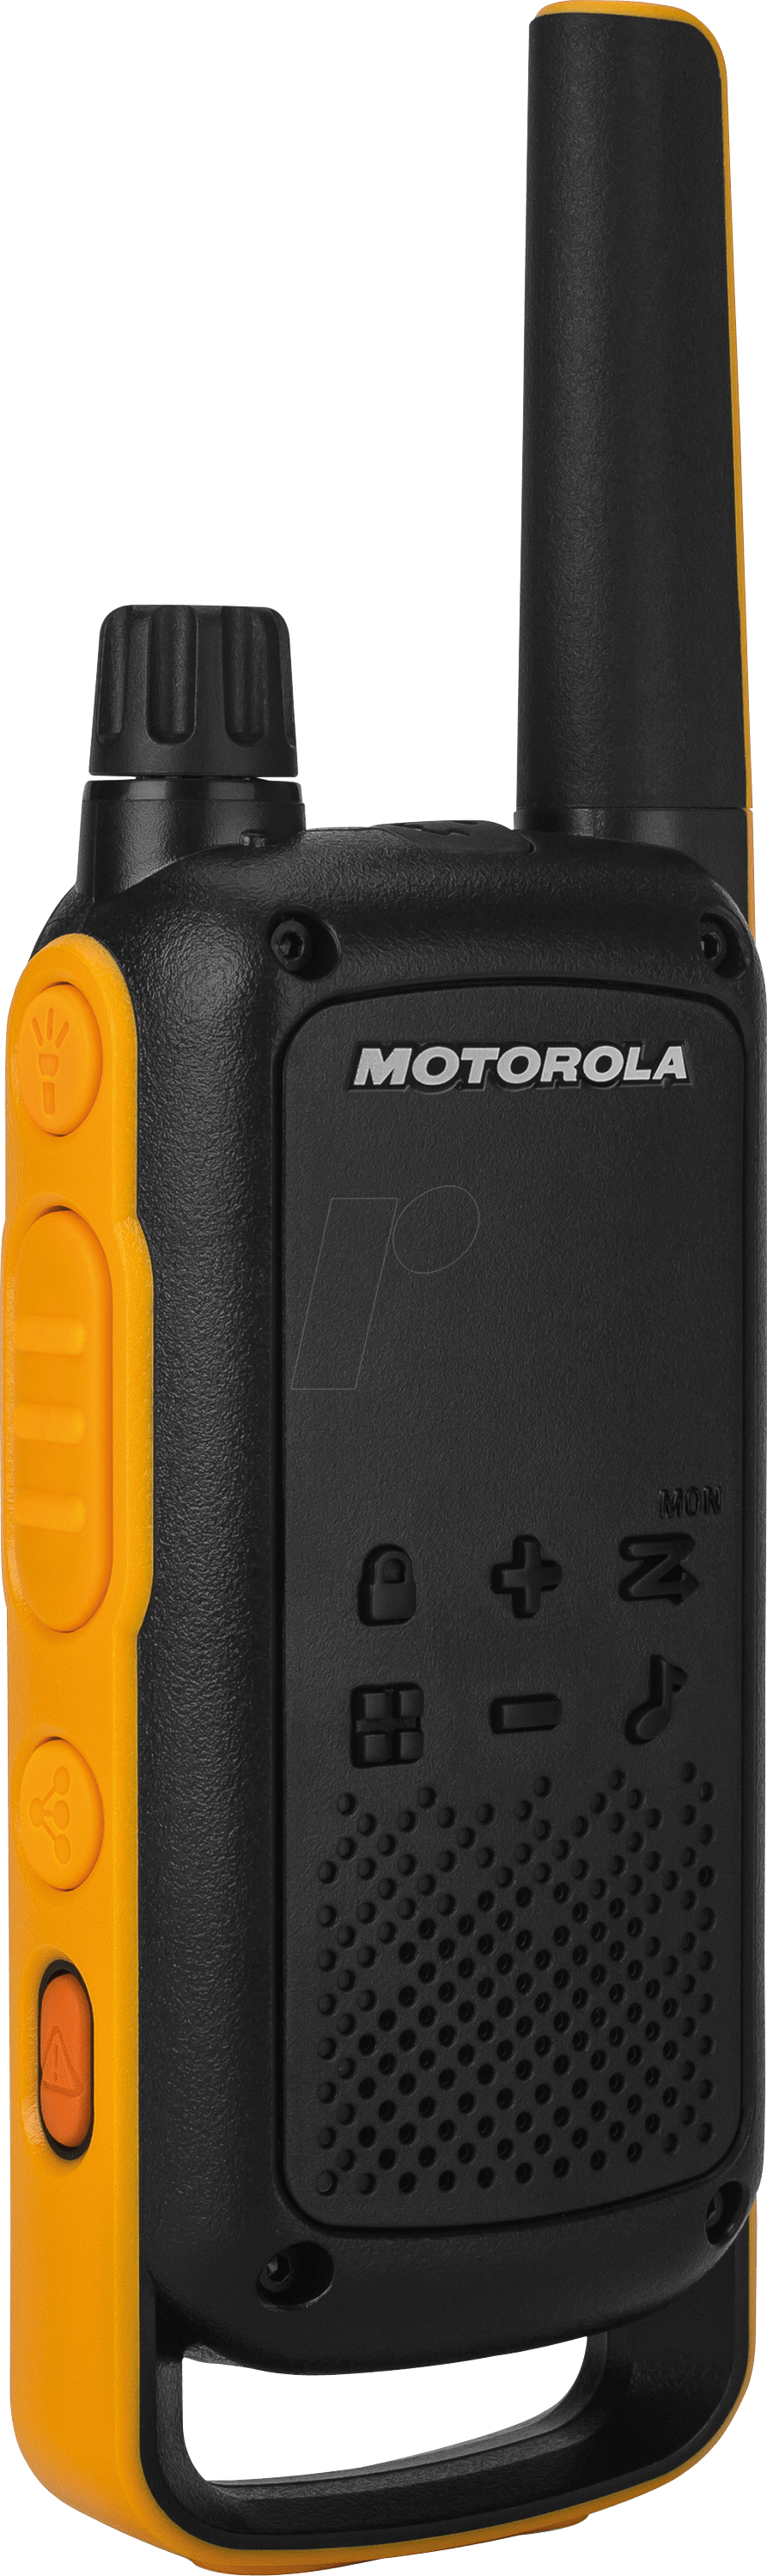 Motorola T82 Extreme RSM, фото